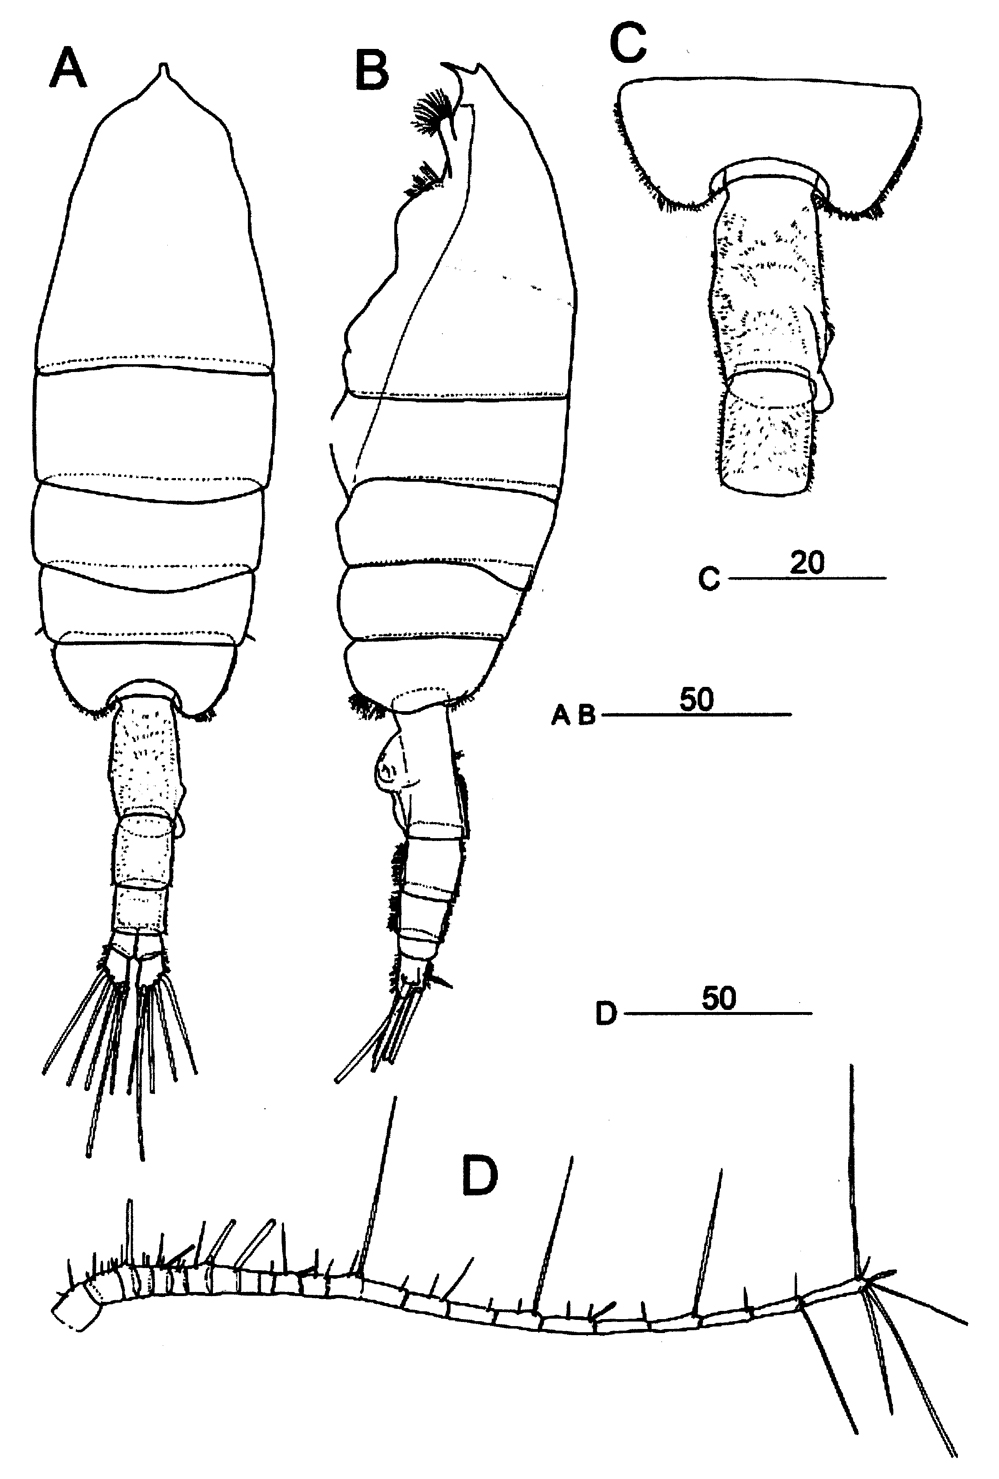 Species Euchaeta indica - Plate 10 of morphological figures